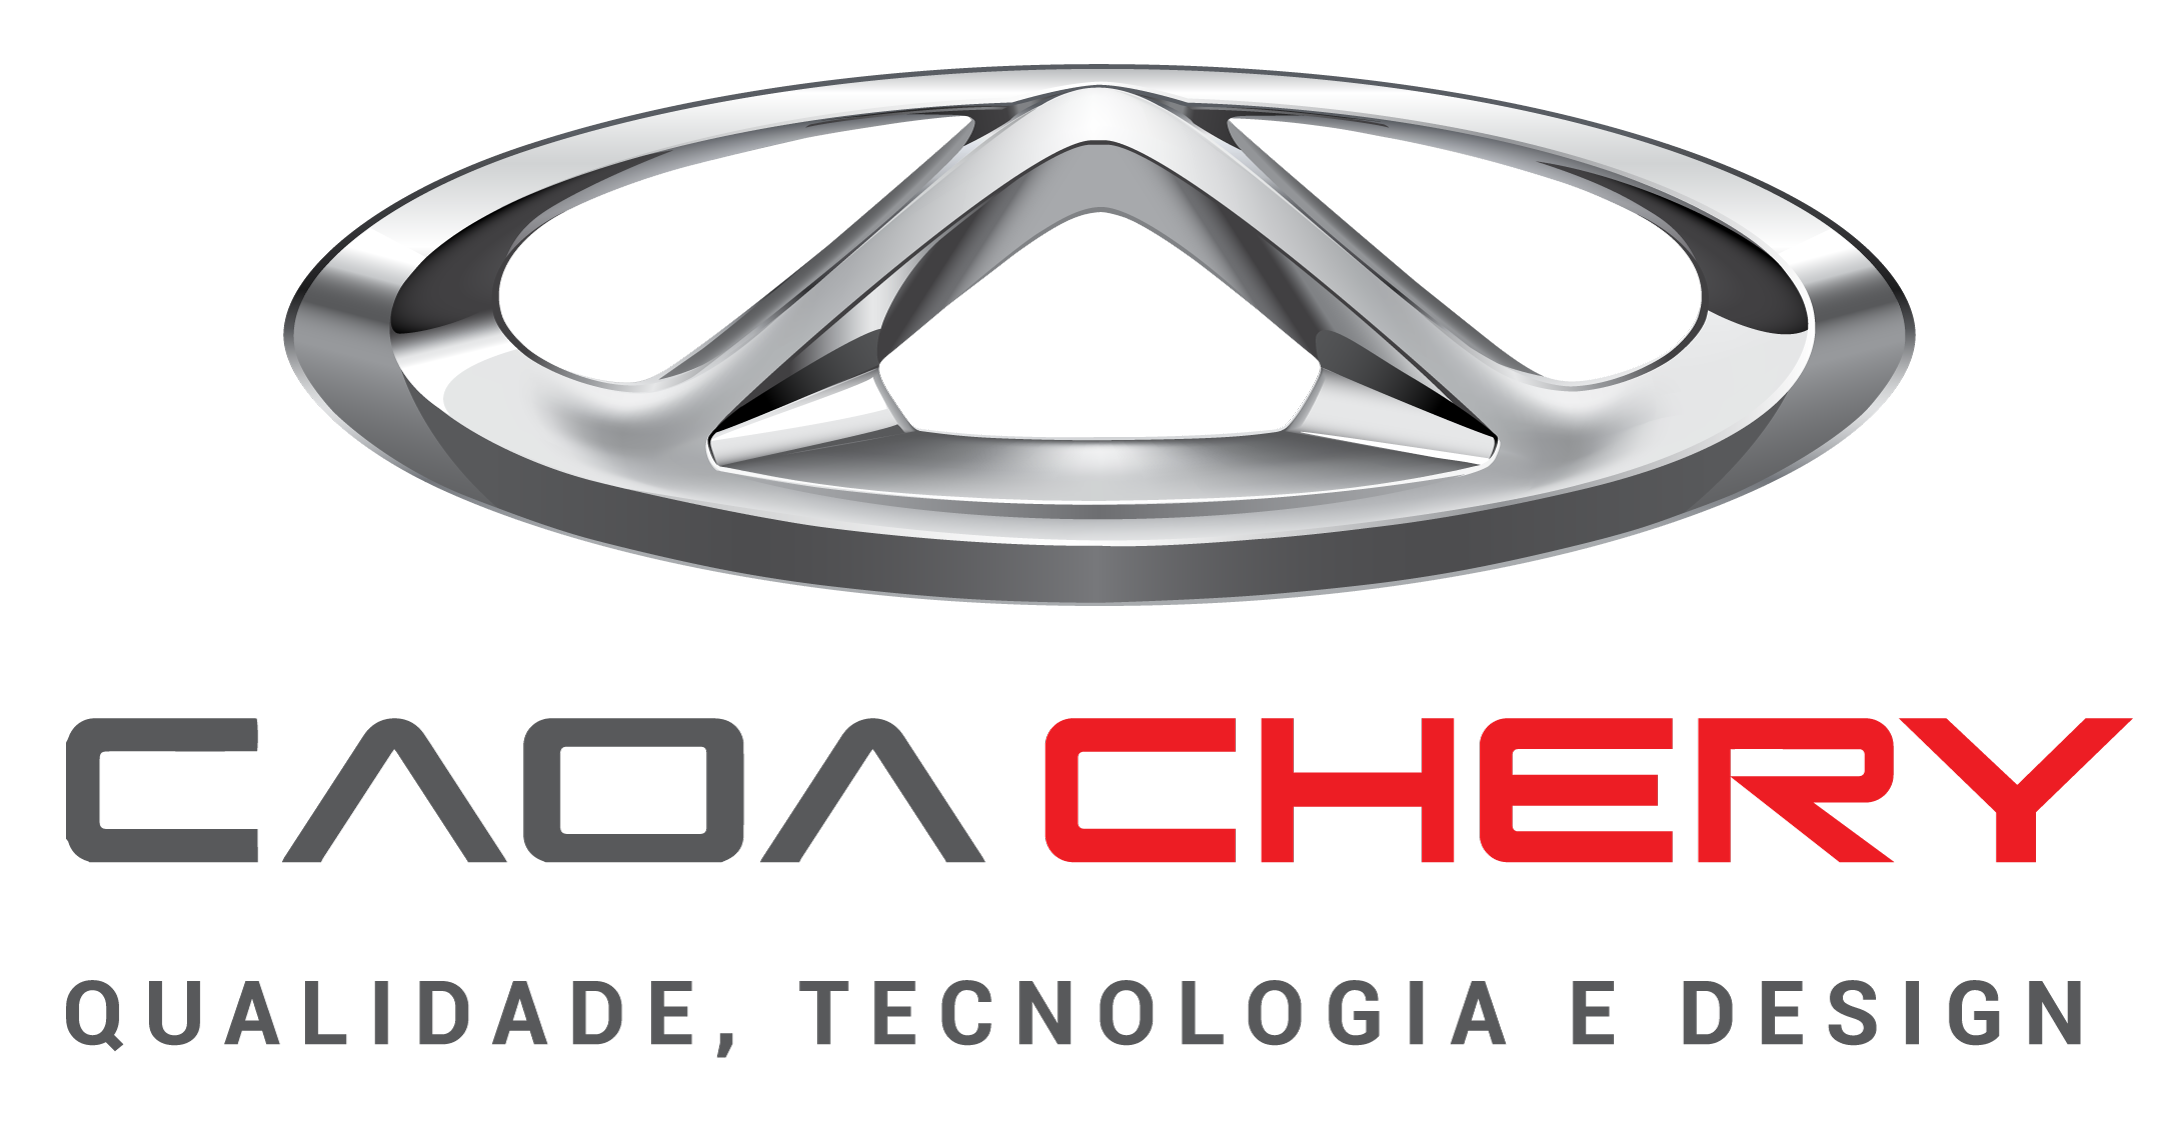 CAOA Chery Logo.